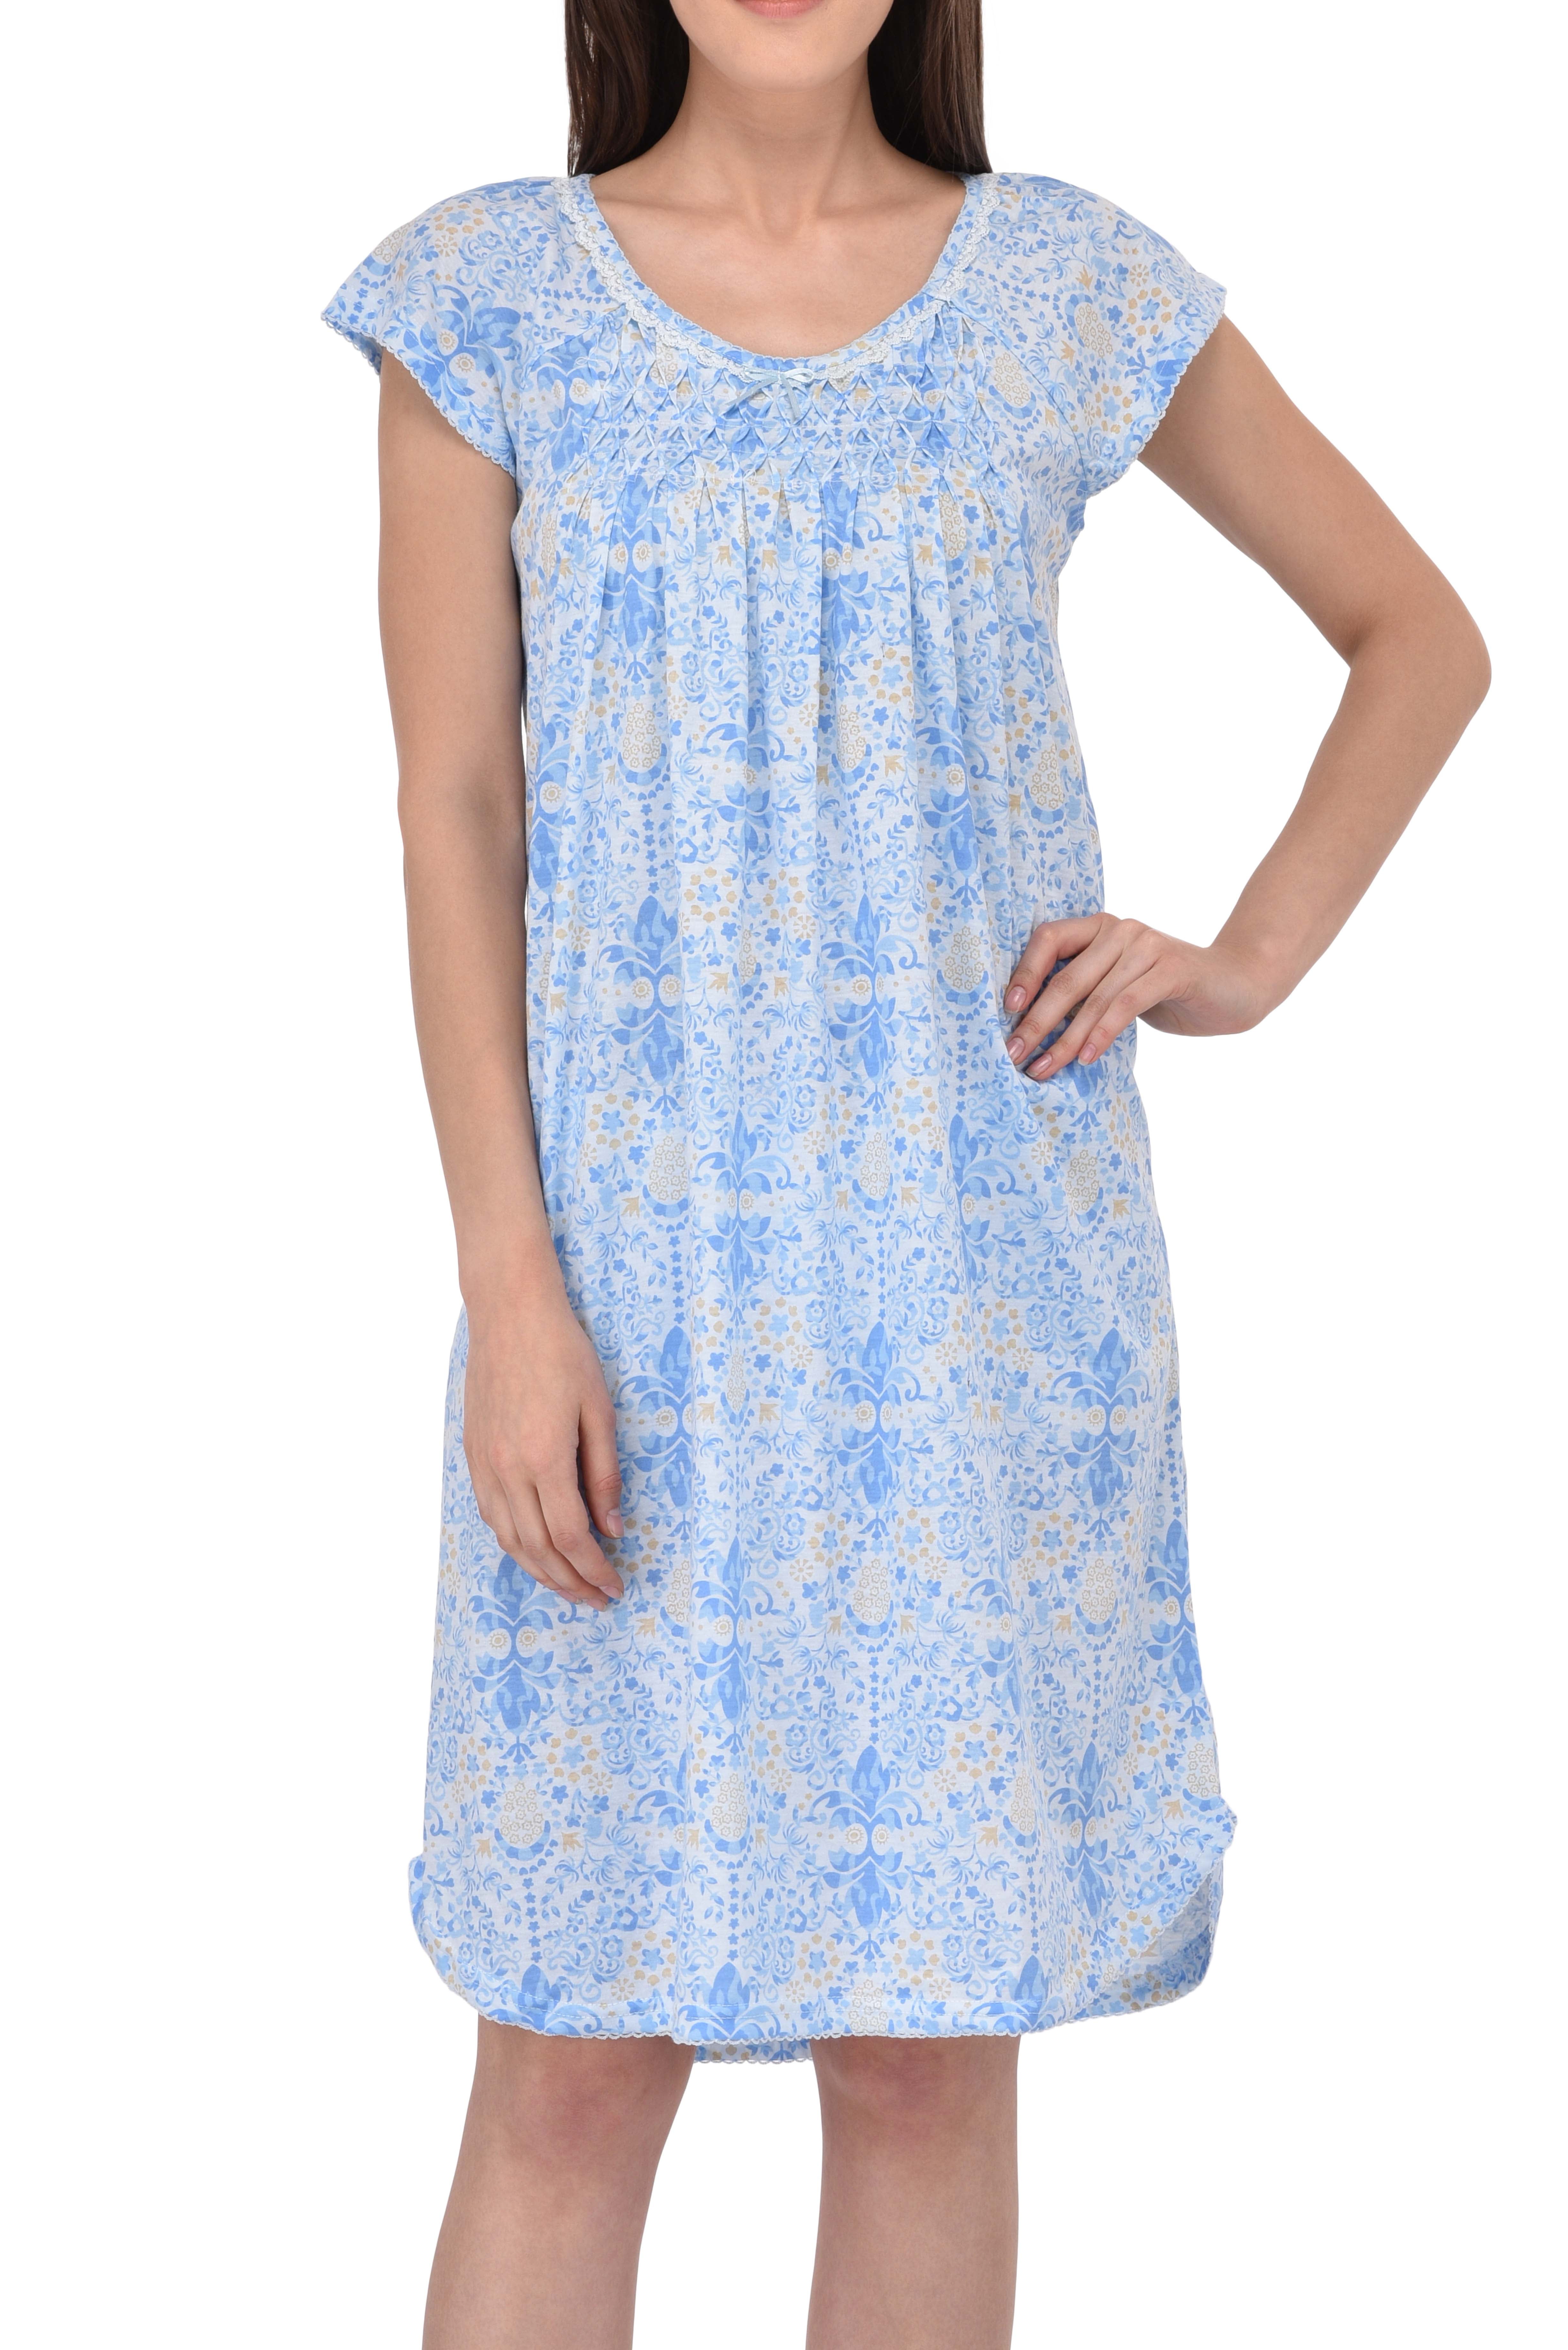 Wenini Womens Ladies Short Sleeve Casual Letter Print Comfy Nightgown Sleep Dress